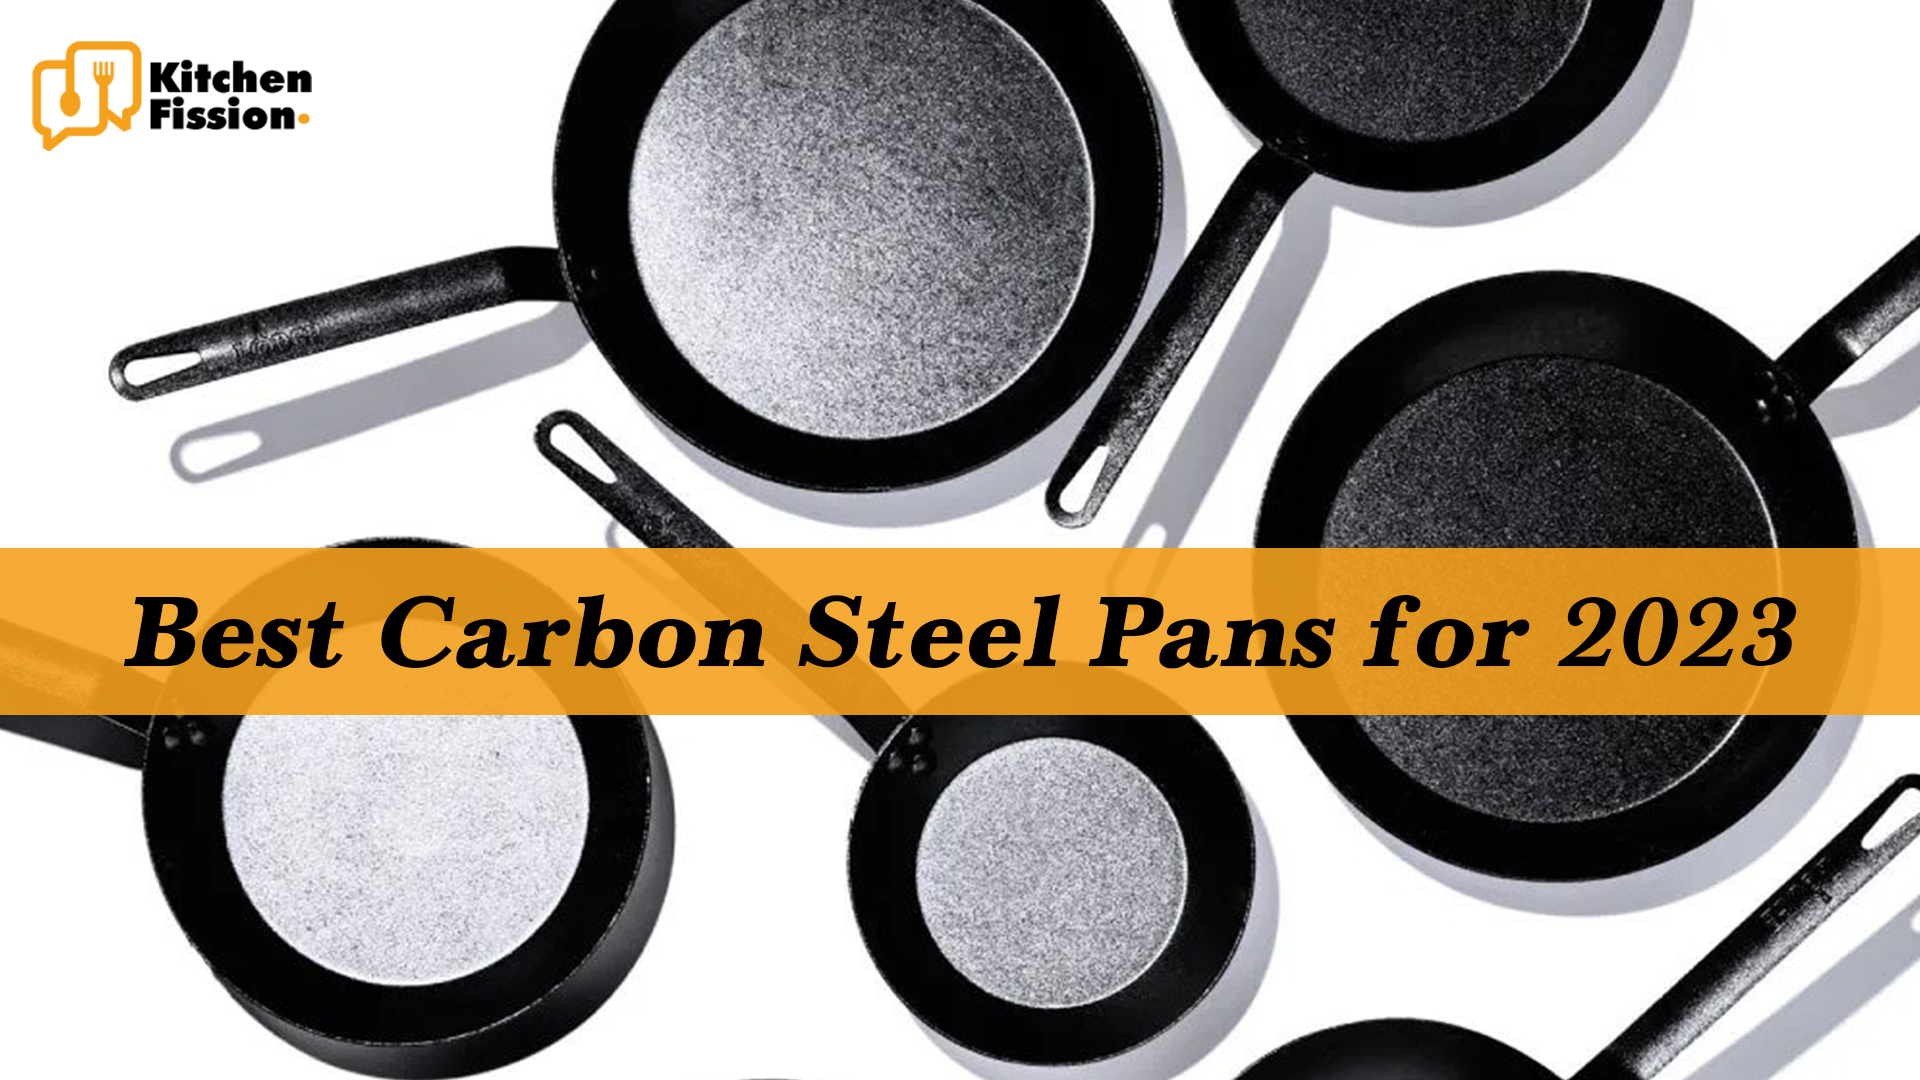 Best Carbon Steel Pans for 2023